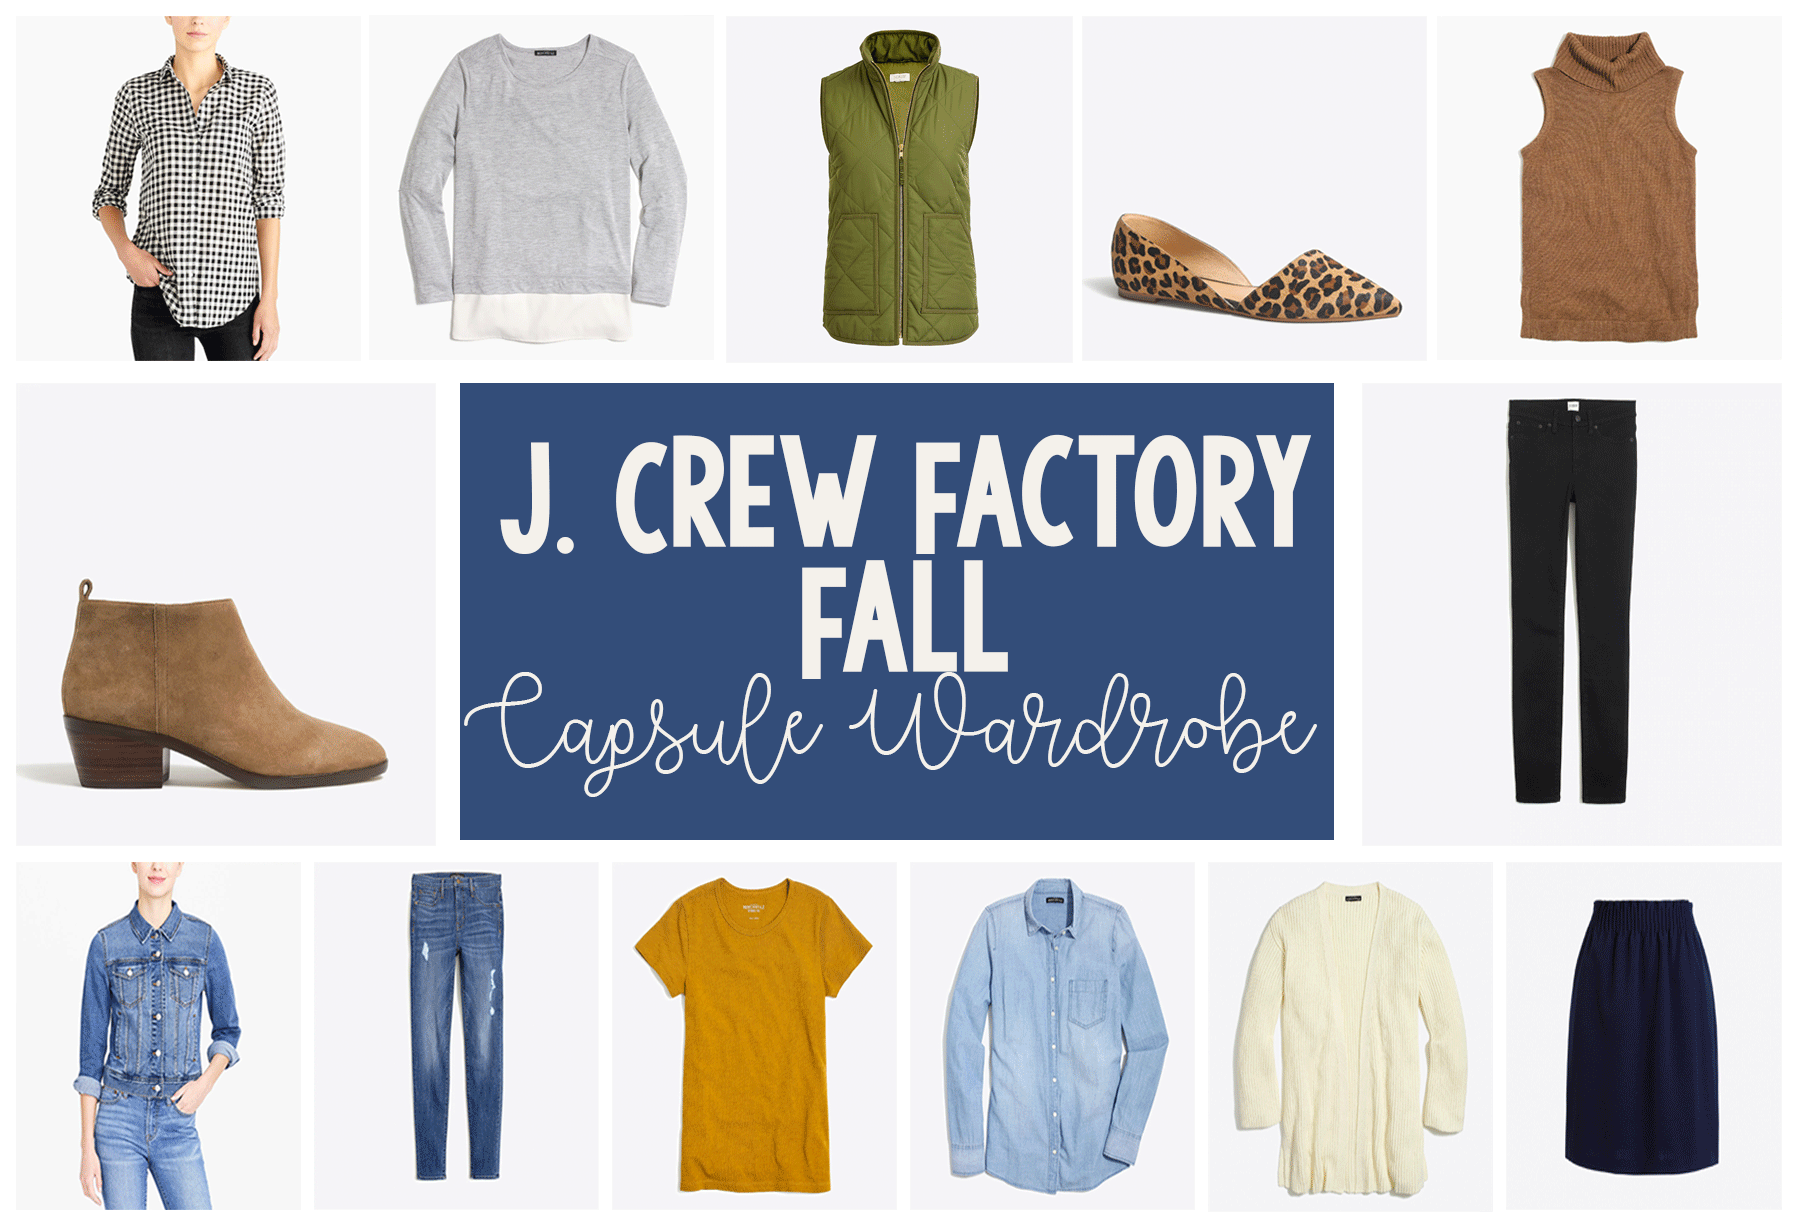 J. Crew Fall Capsule Wardrobe